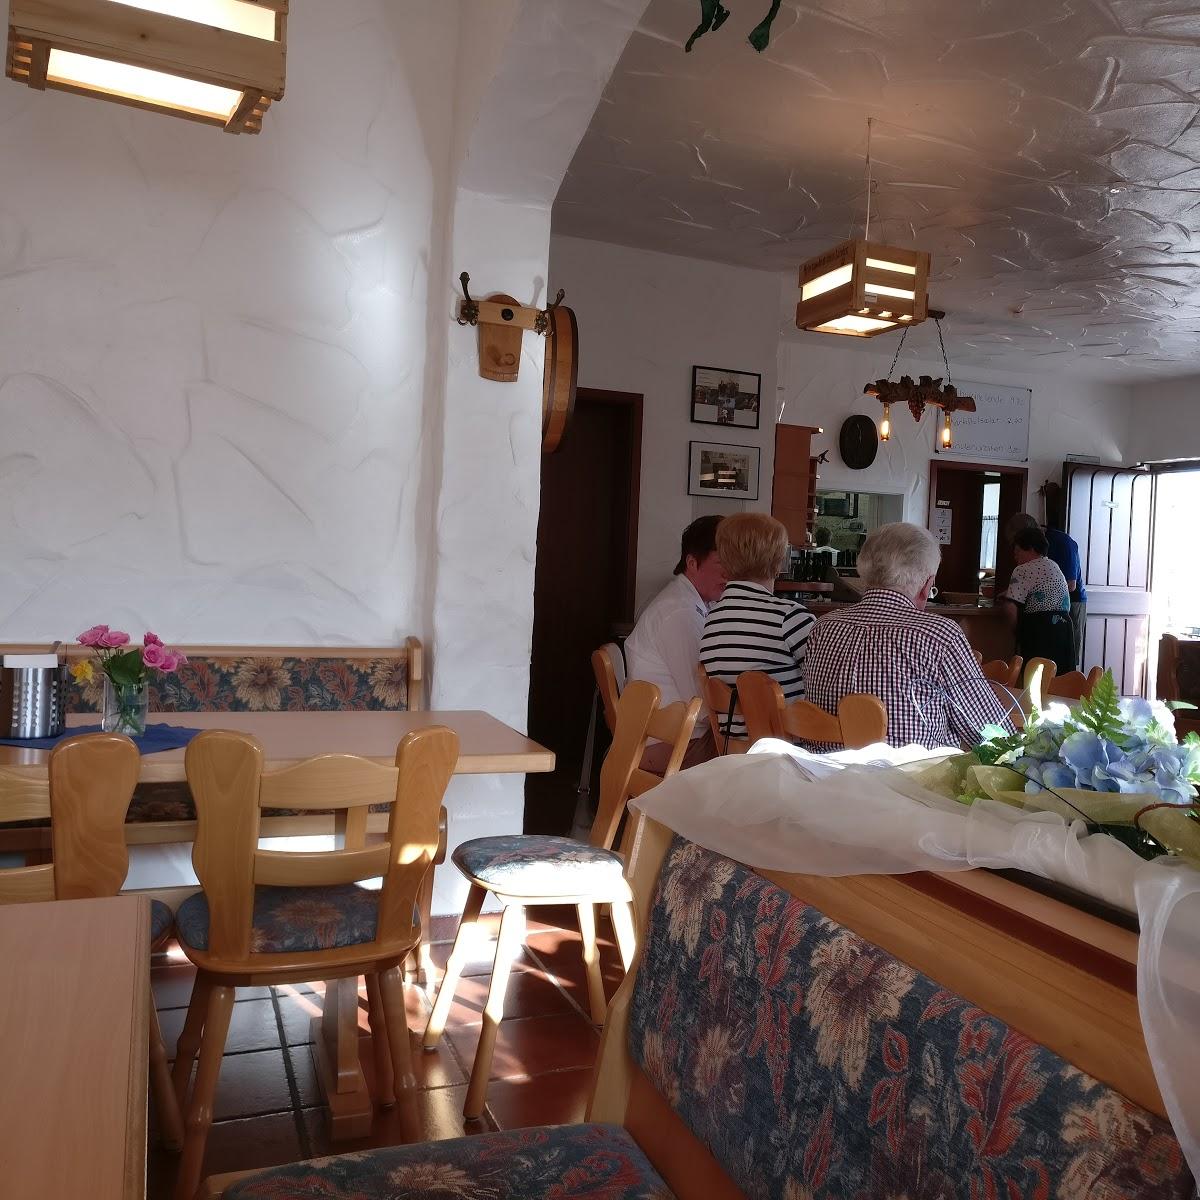 Restaurant "Besenwirtschaft Faigle" in Vaihingen an der Enz